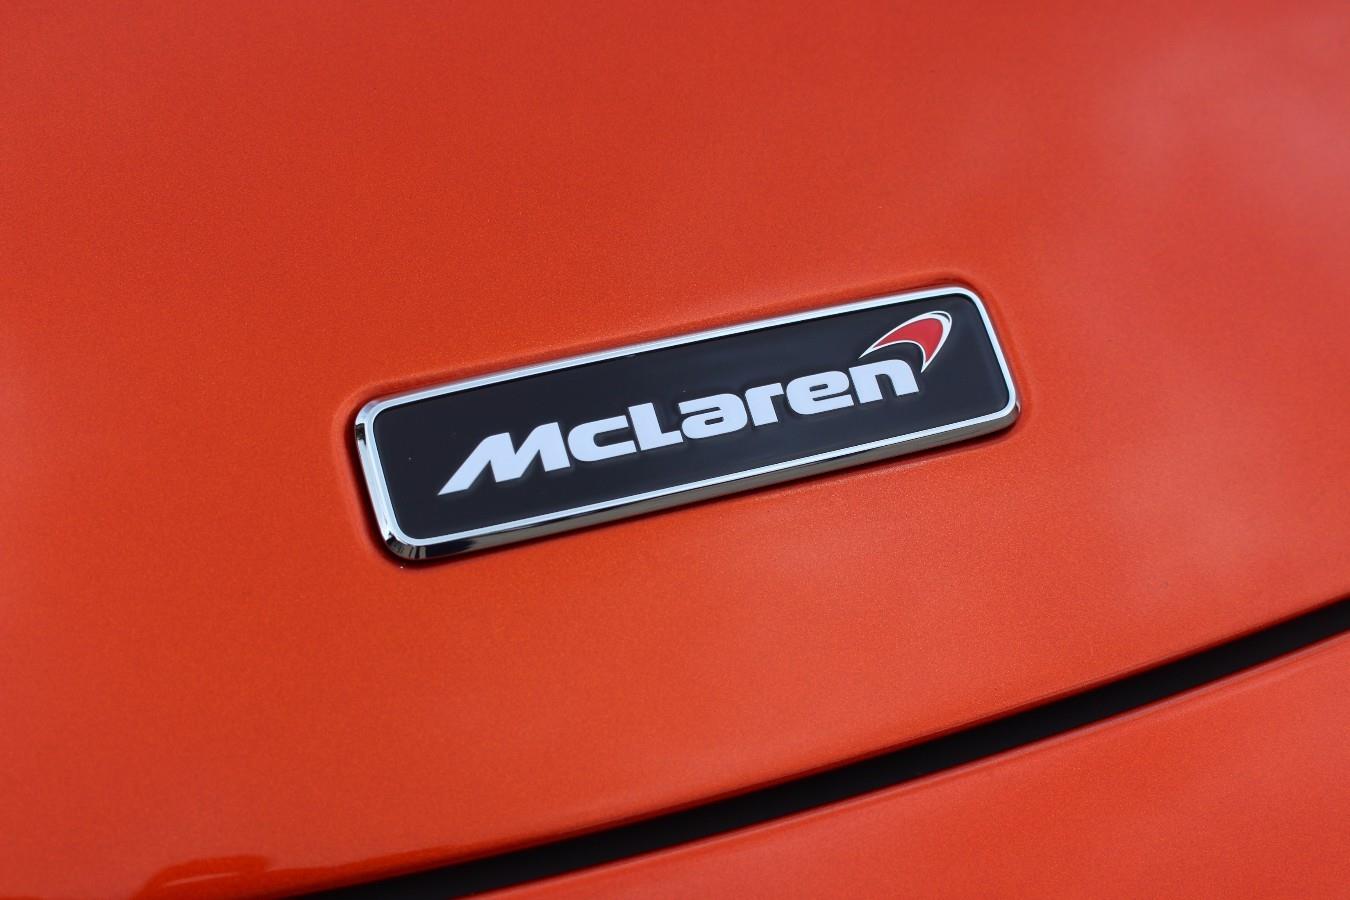 MSO Volcano Orange McLaren 675LT Spider продается за 423,950 фунтов